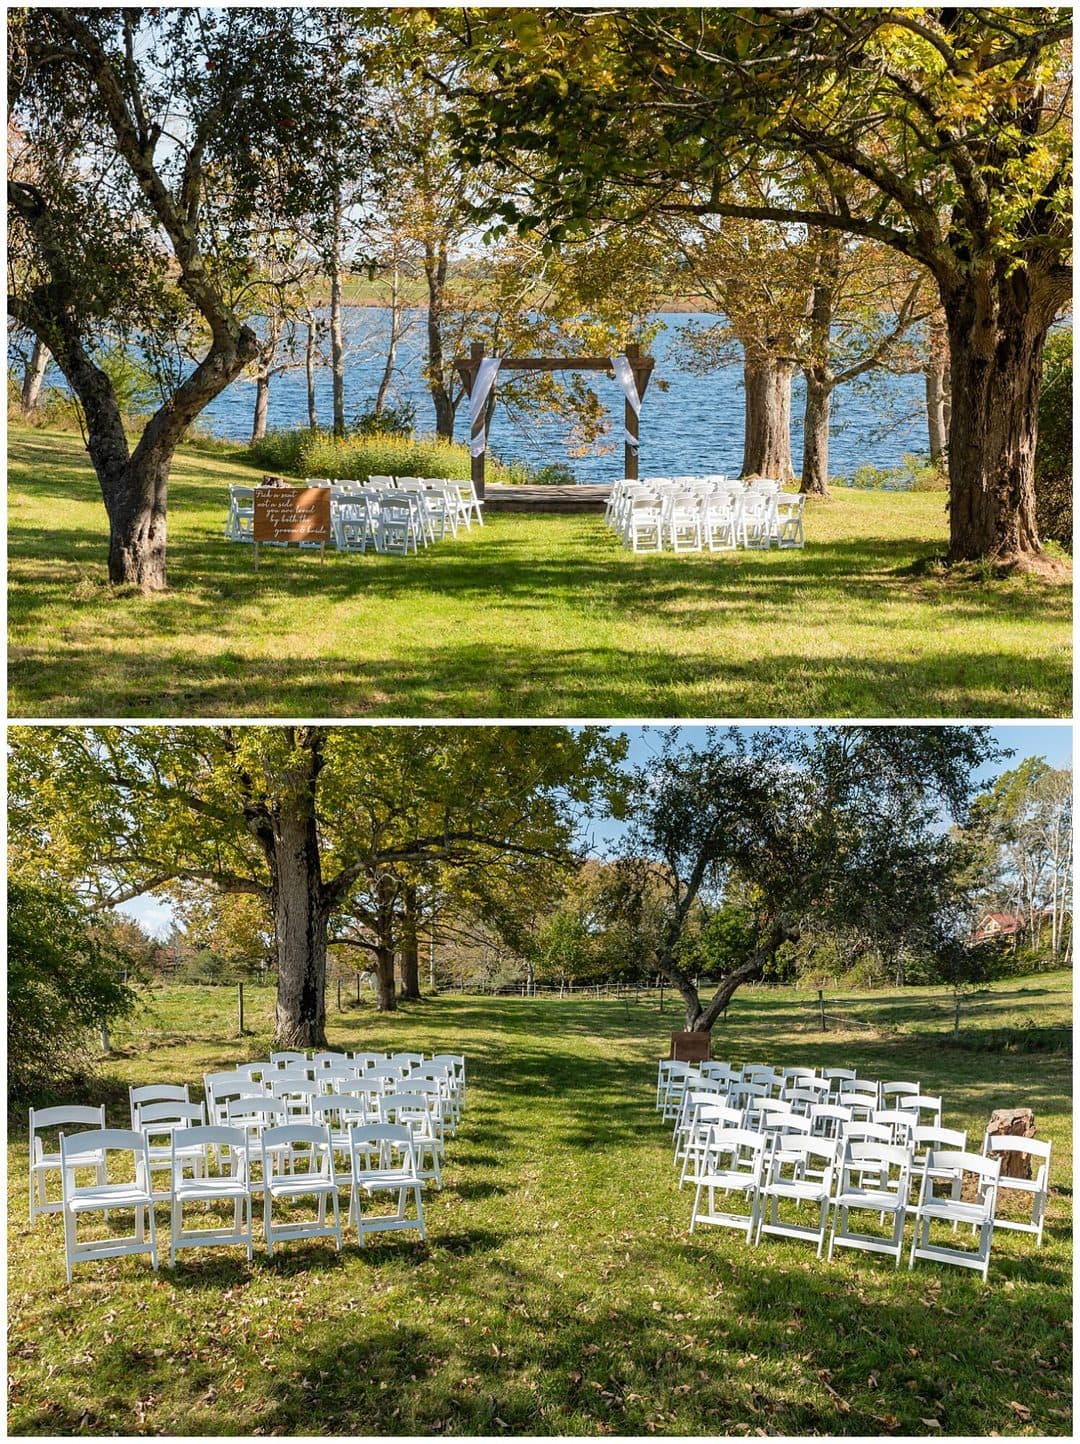 A beautiful outdoor wedding ceremony set up a the Kinley Farm in Lunenburg, Nova Scotia.